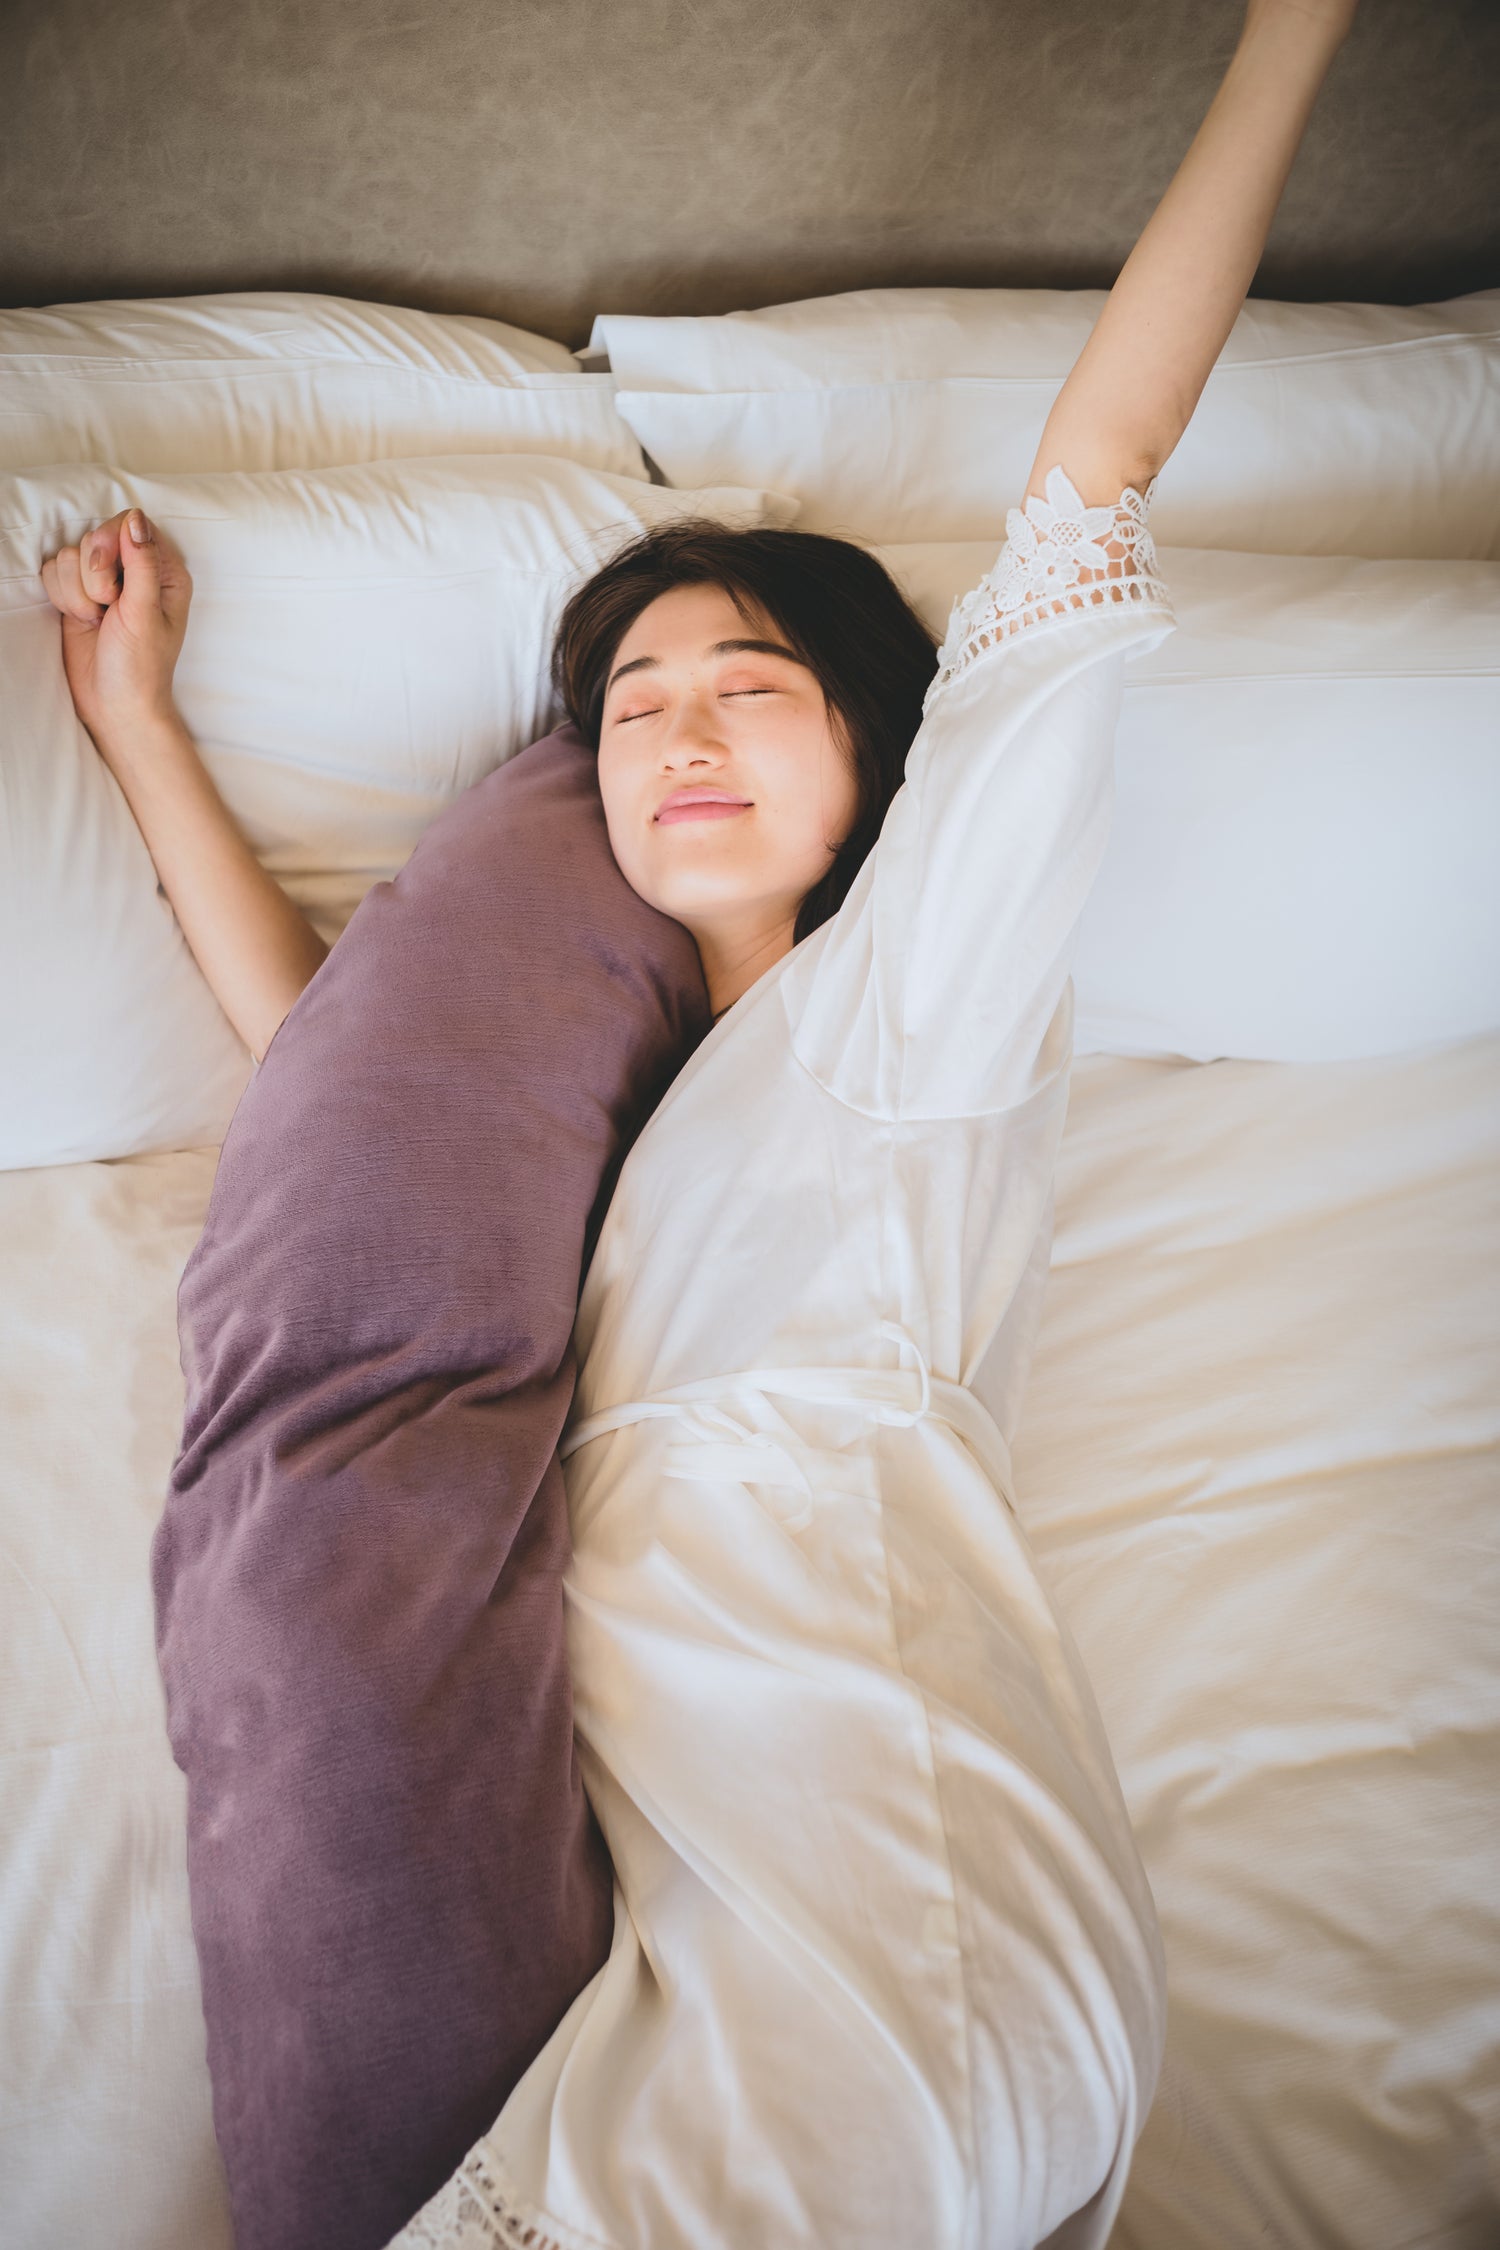 hiamom wool pregnancy pillow supports side sleep, sleep comfortably during pregnancy 